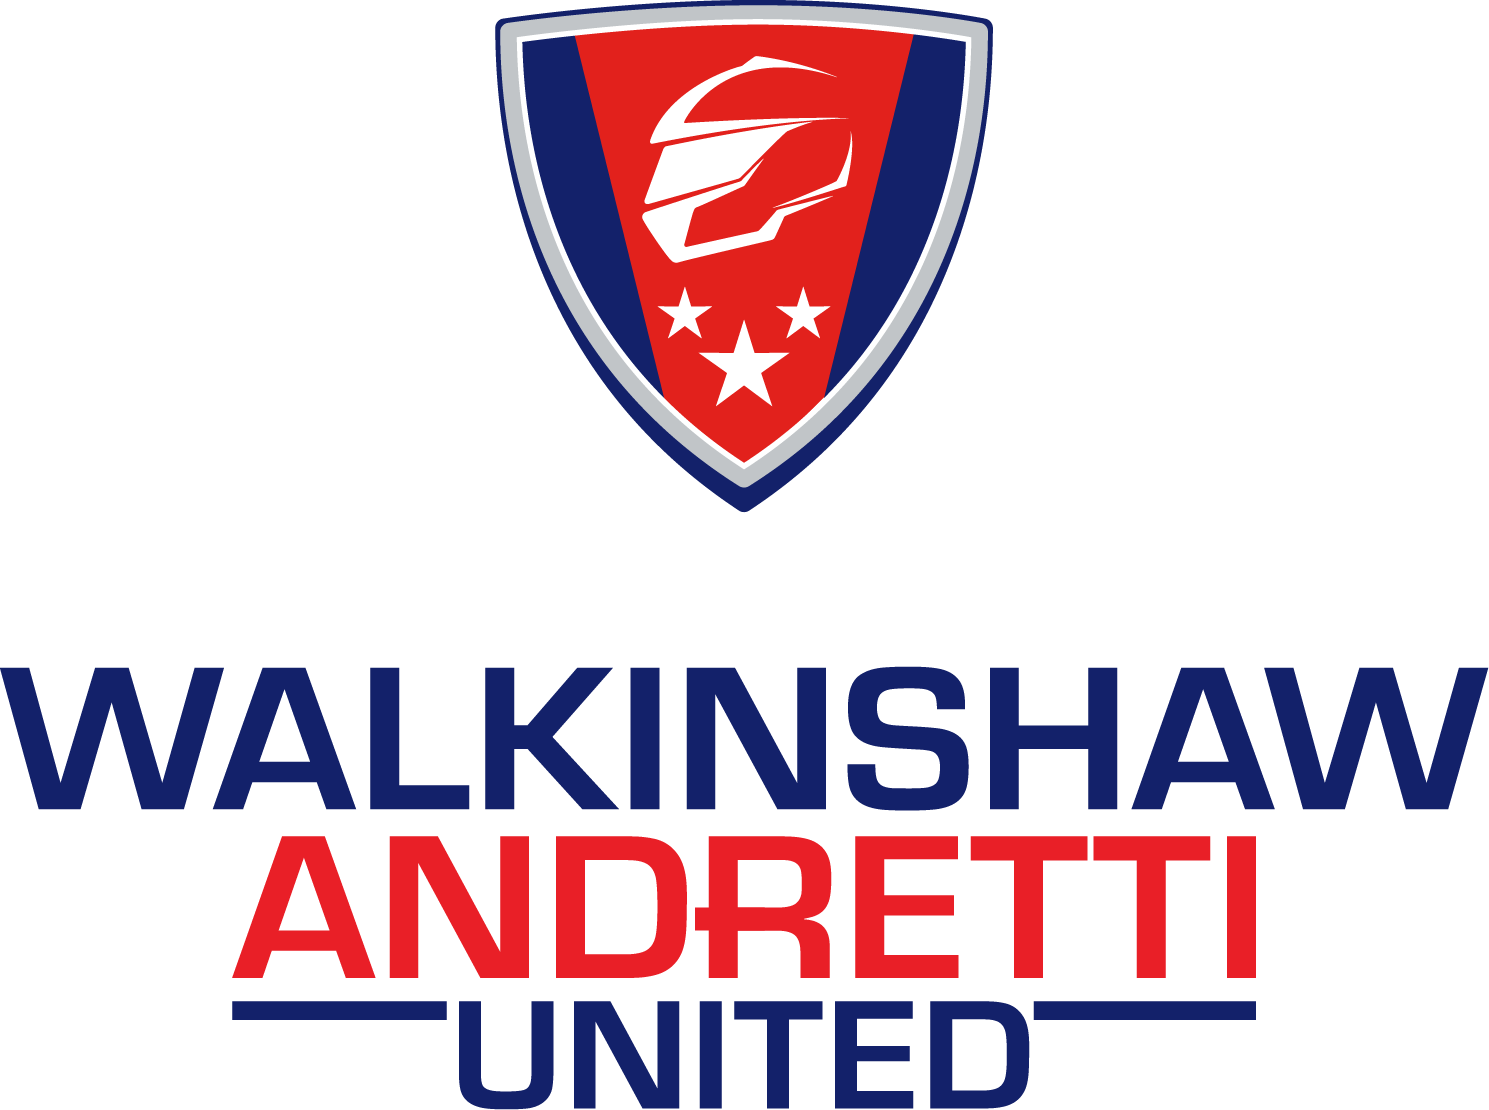 Walkinshaw Andretti United logo